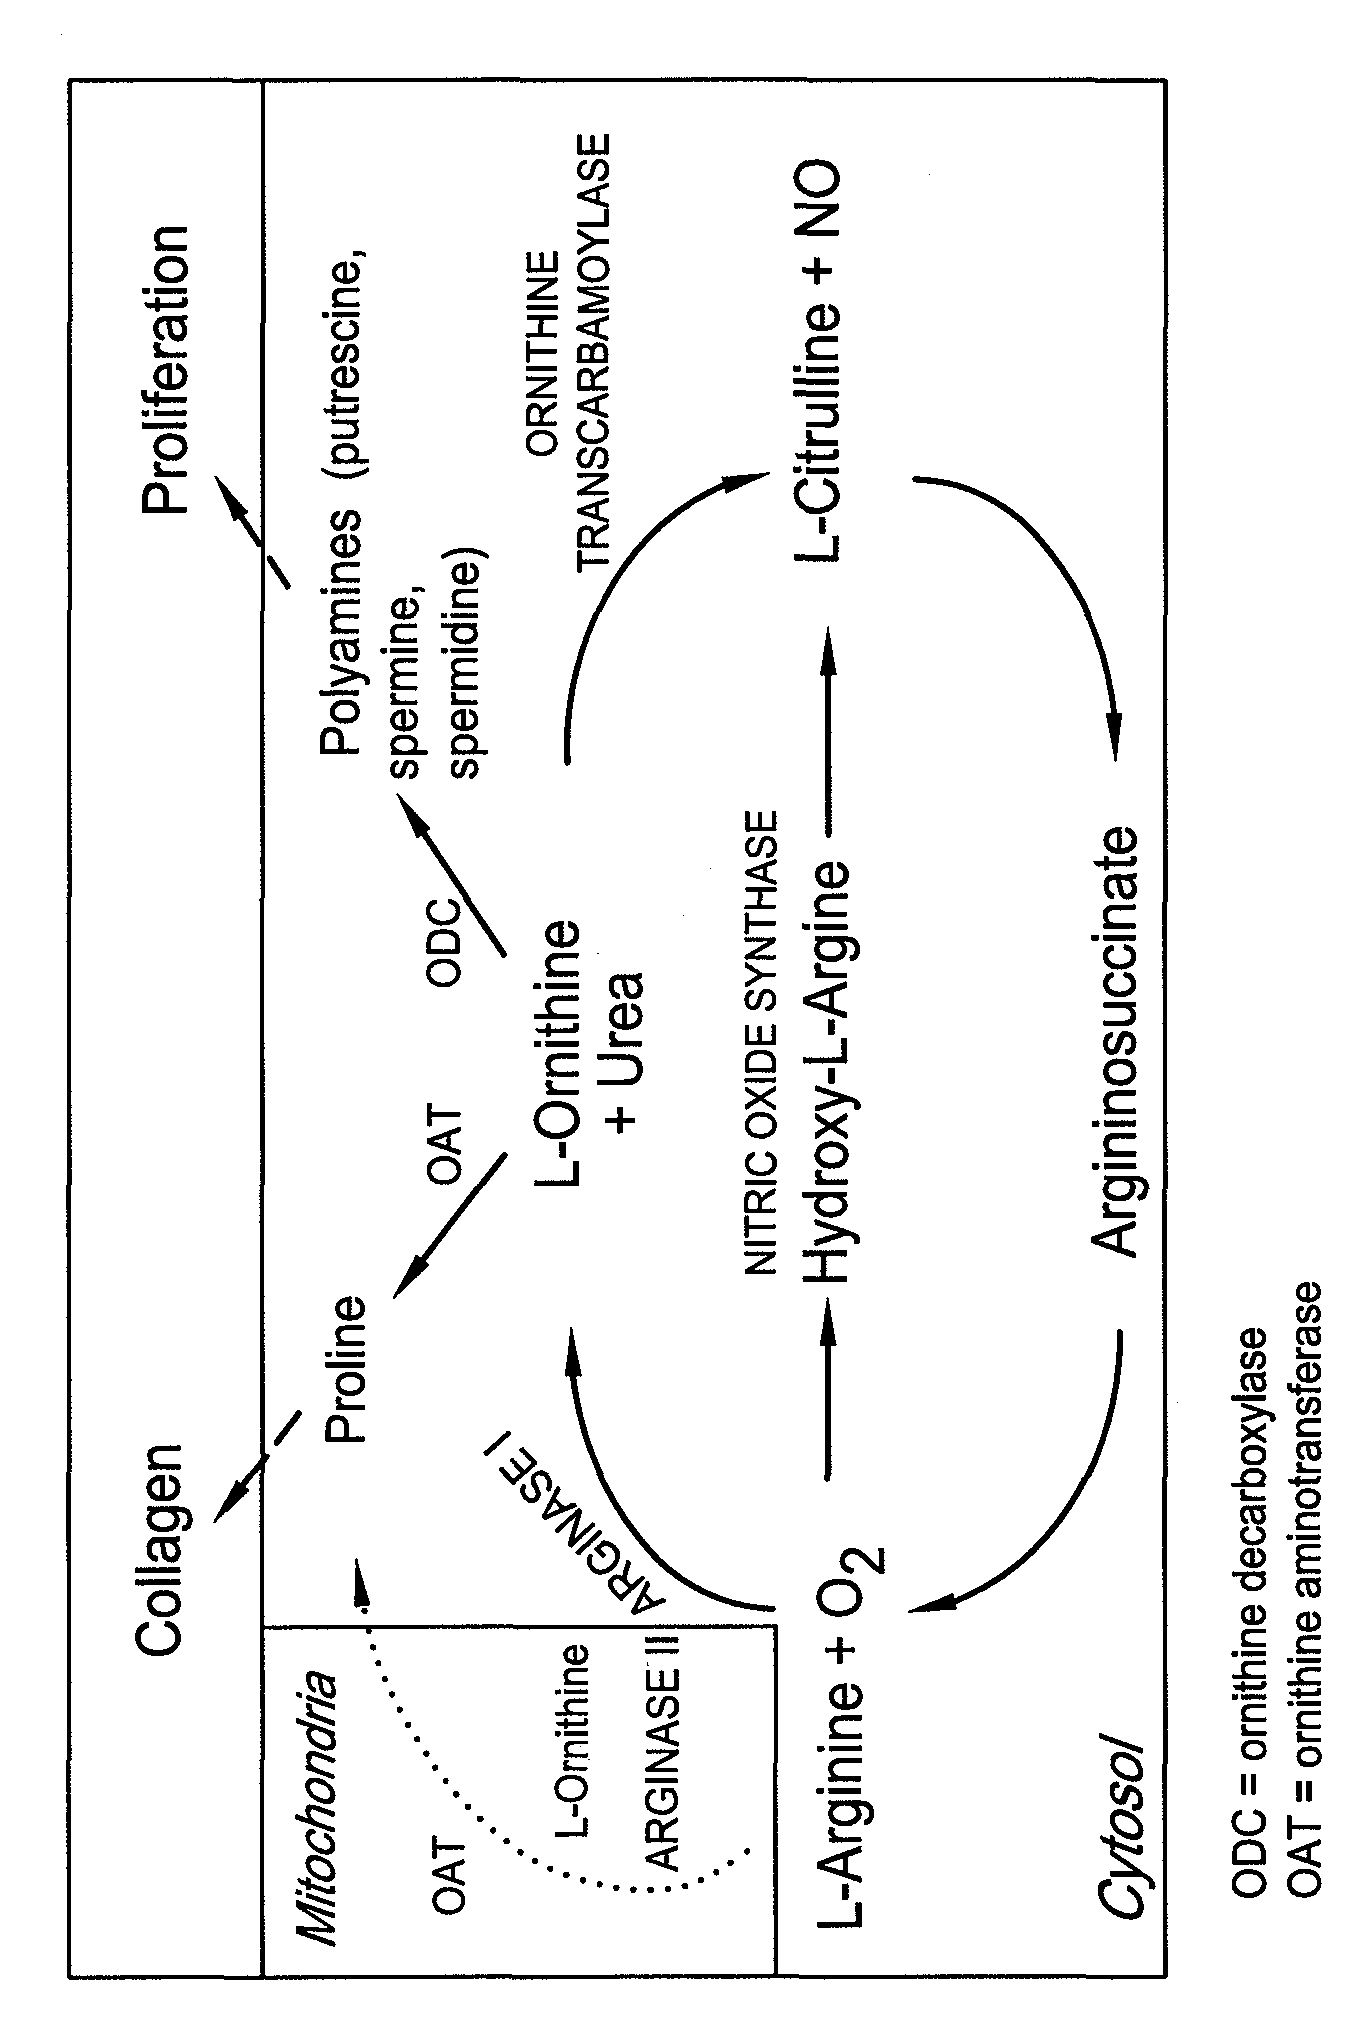 Compositions comprising dimethyl sulfoxide (DMSO)